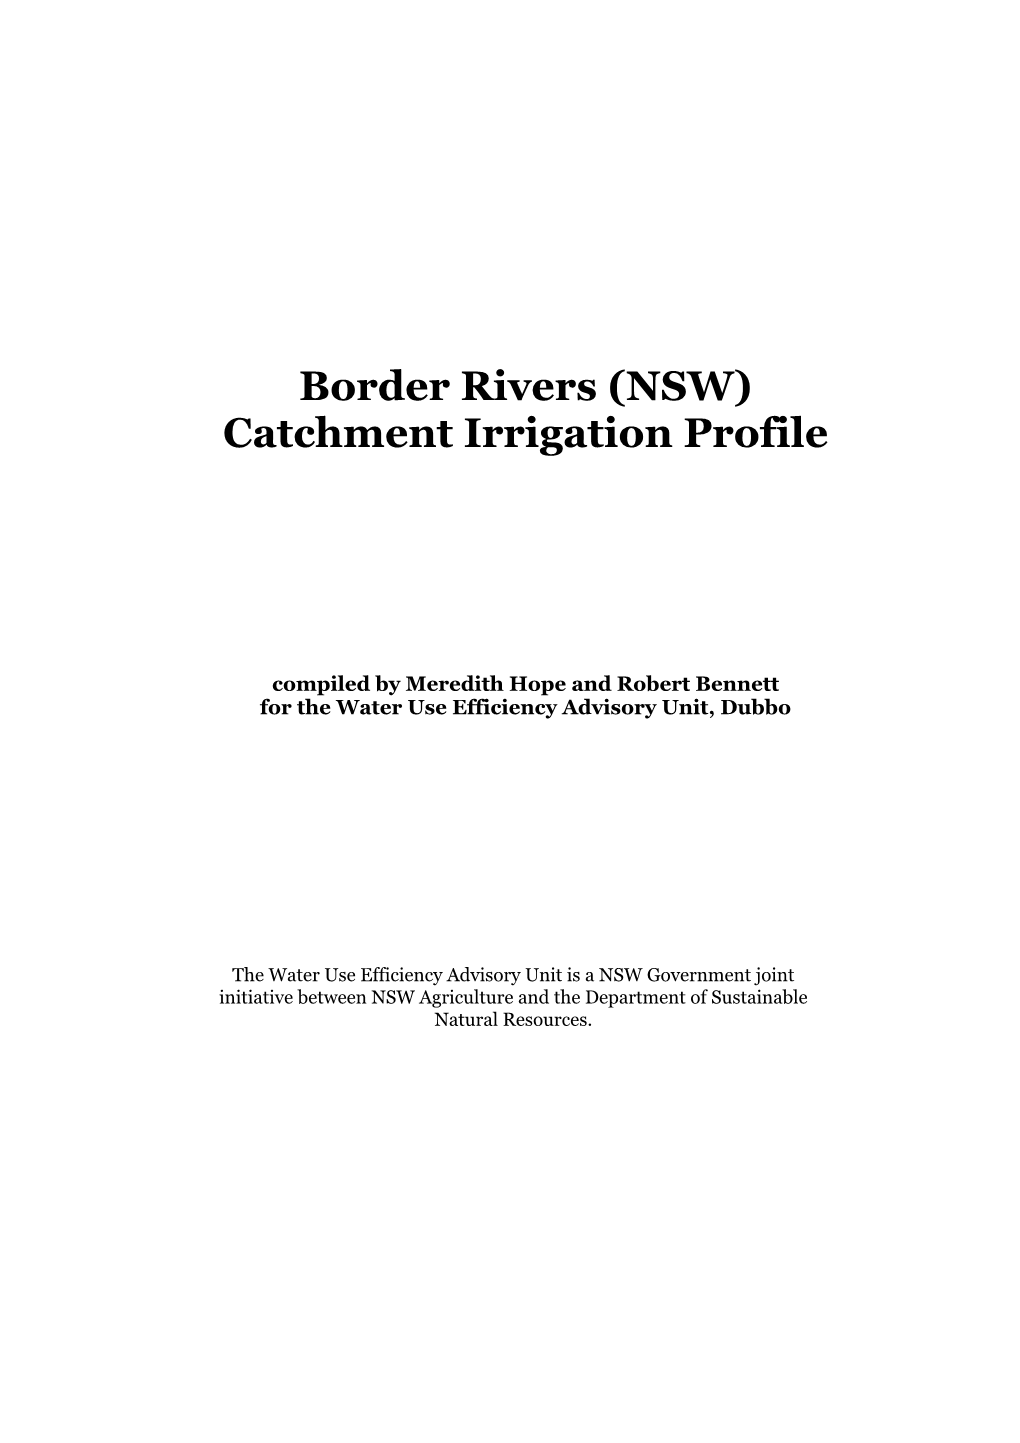 Border Rivers (NSW) Catchment Irrigation Profile